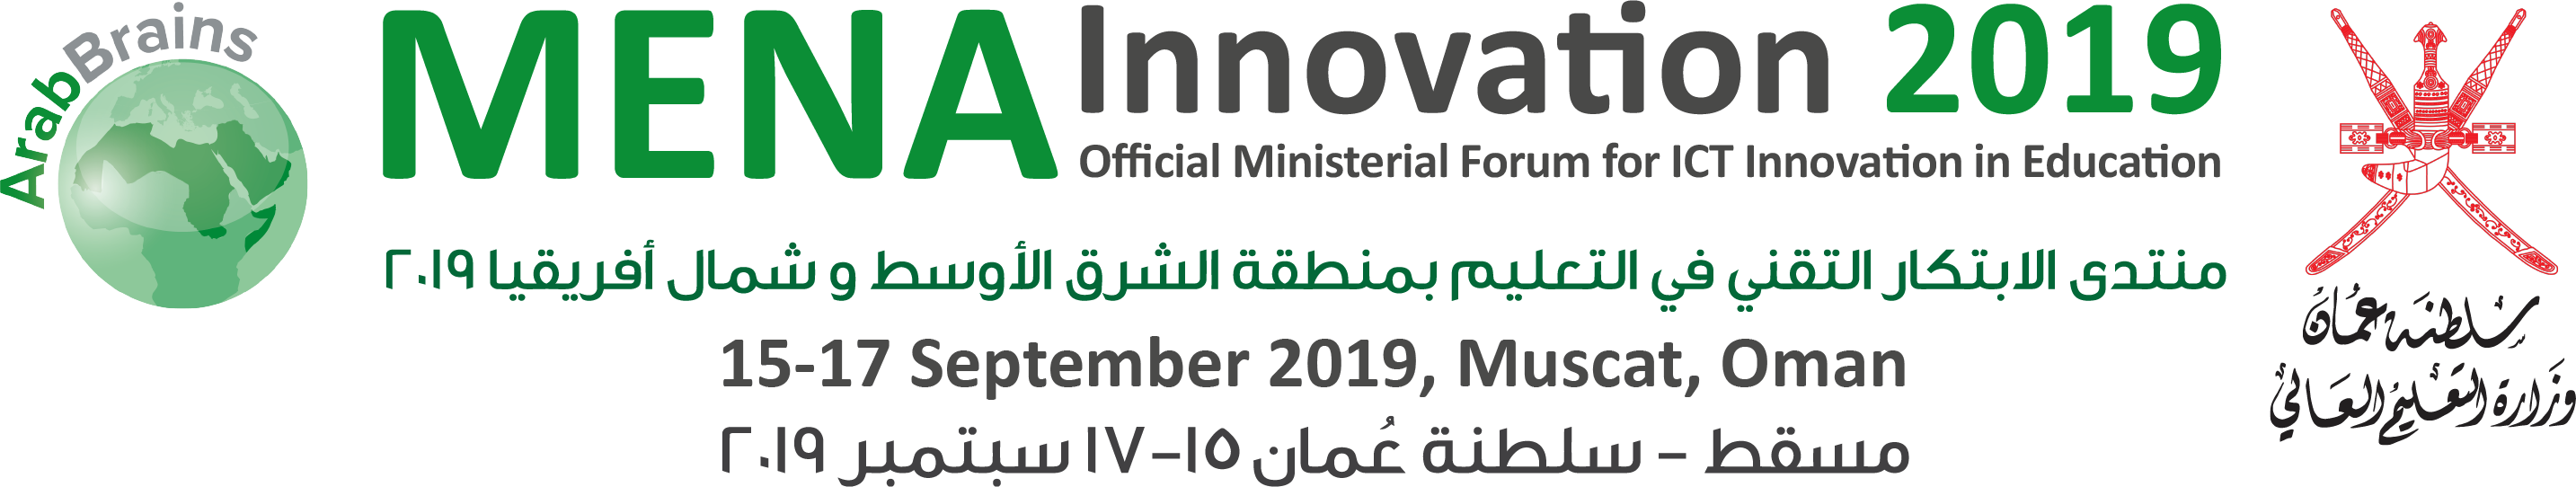 MENA Innovation 2019 - Official ICT Innovation in Education Forum